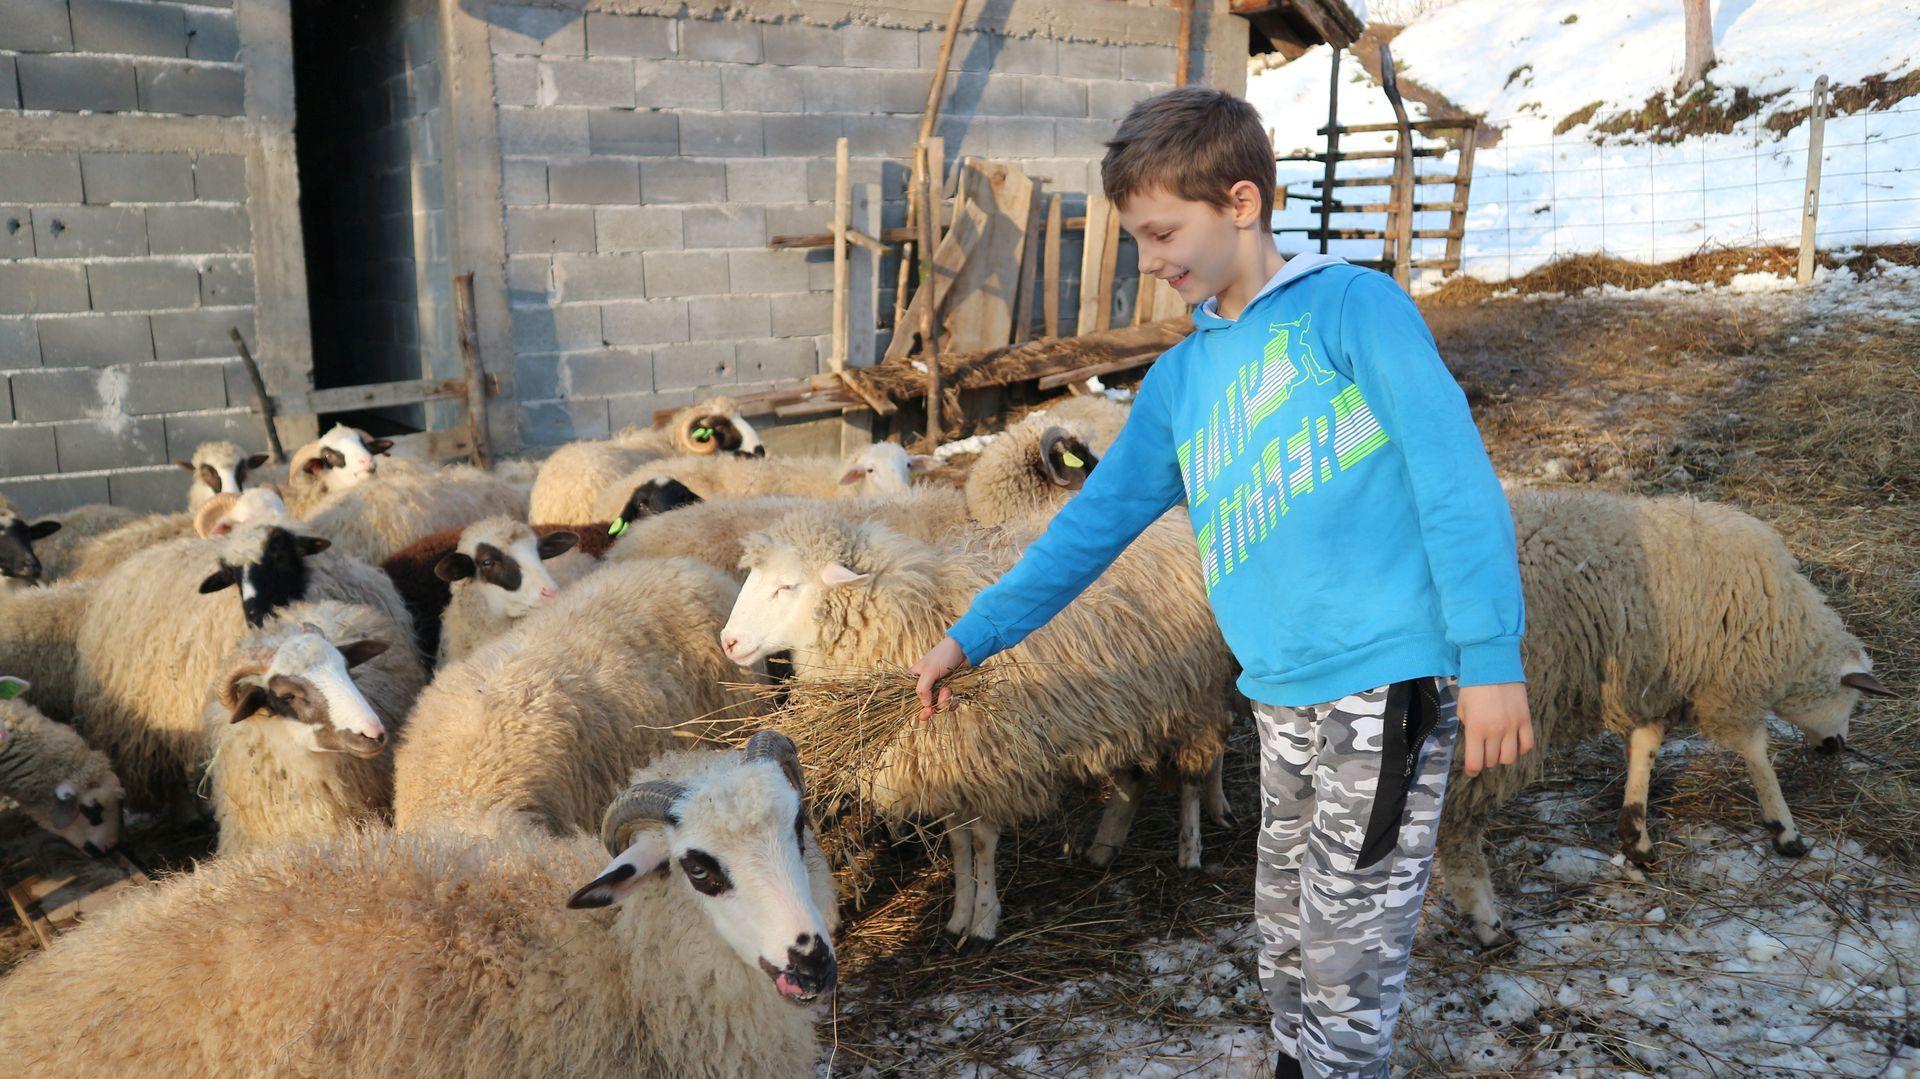 Amer ponosno pozira pored svog stada: Sam se brine o ovcama - Avaz